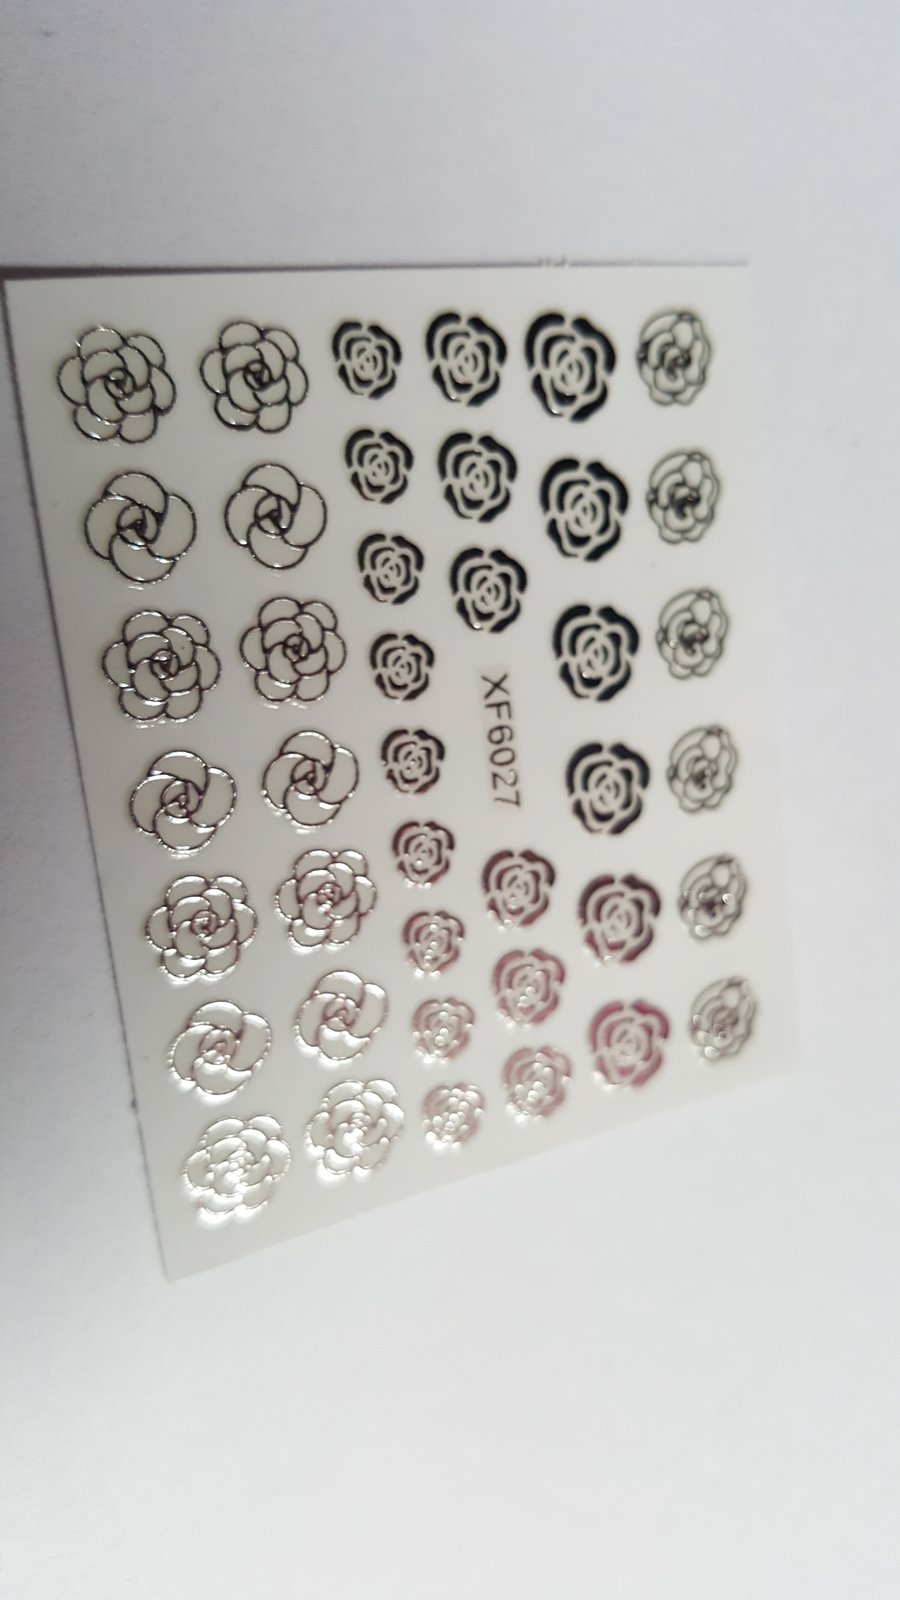 1 x Nail Art Sticker Sheet - 63mm x 52mm - 2